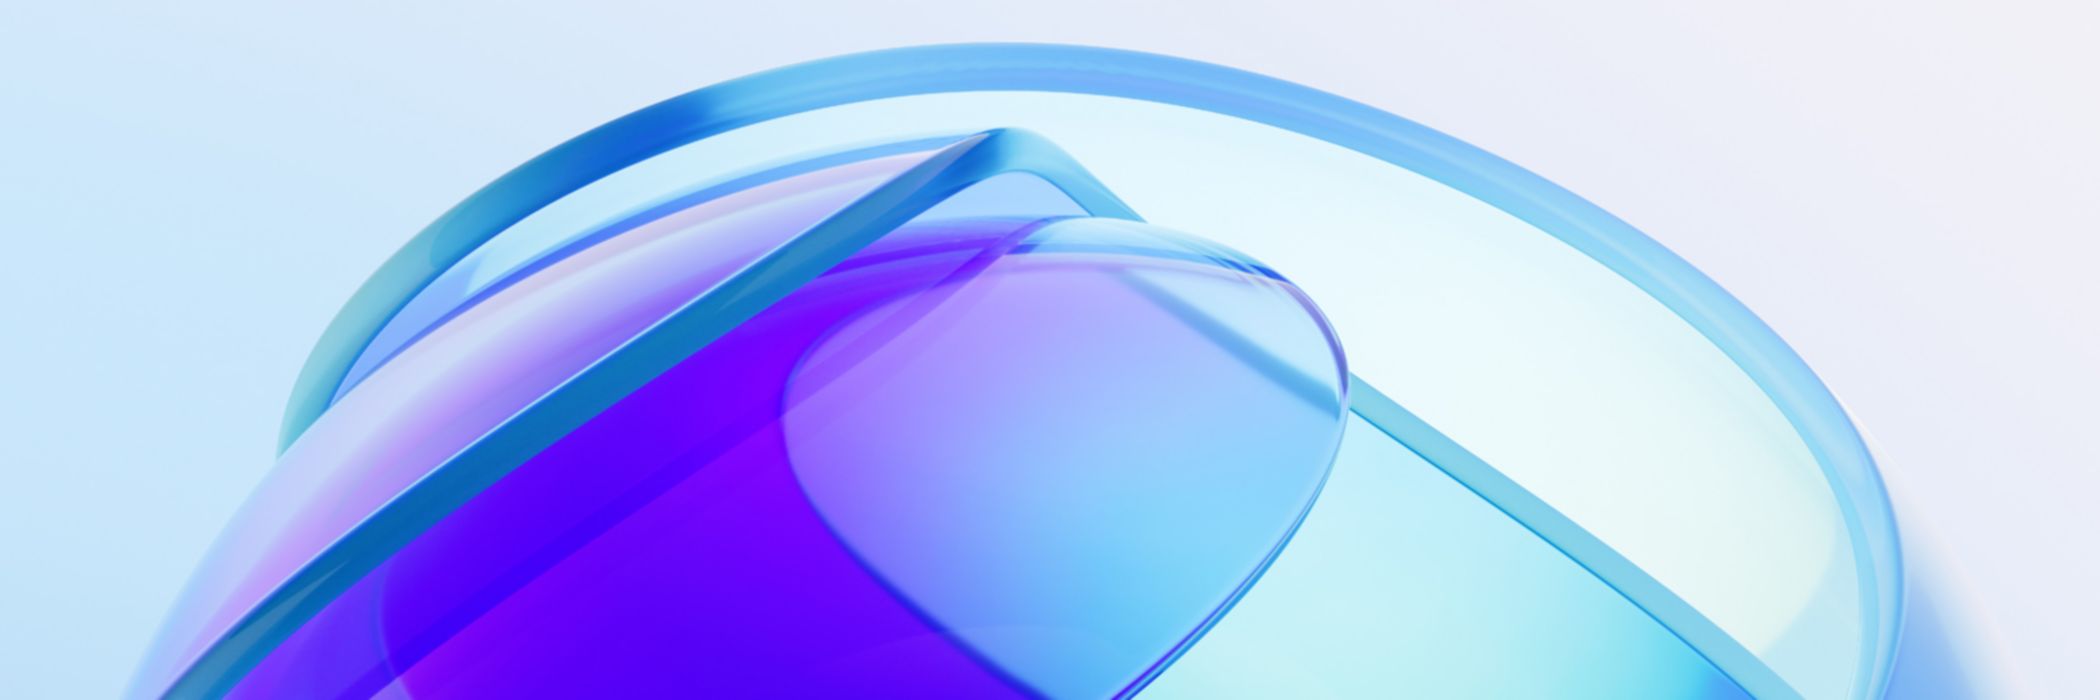 3d-blue-glass-spherical-shape